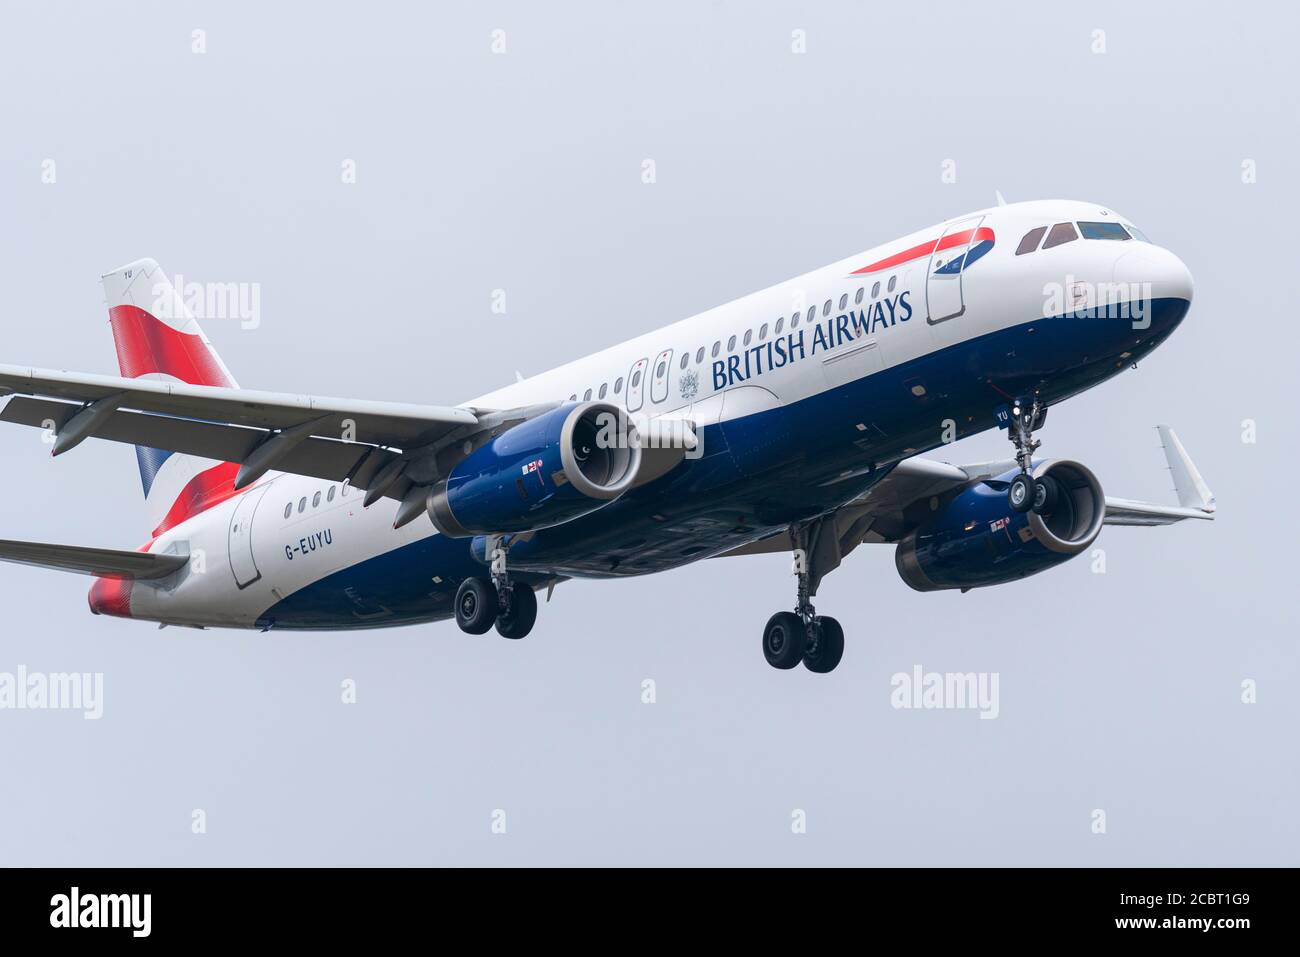 British Airways Airbus A320 jet airliner plane landing at London Heathrow Airport, UK, during COVID-19 Coronavirus pandemic, in bad weather Stock Photo